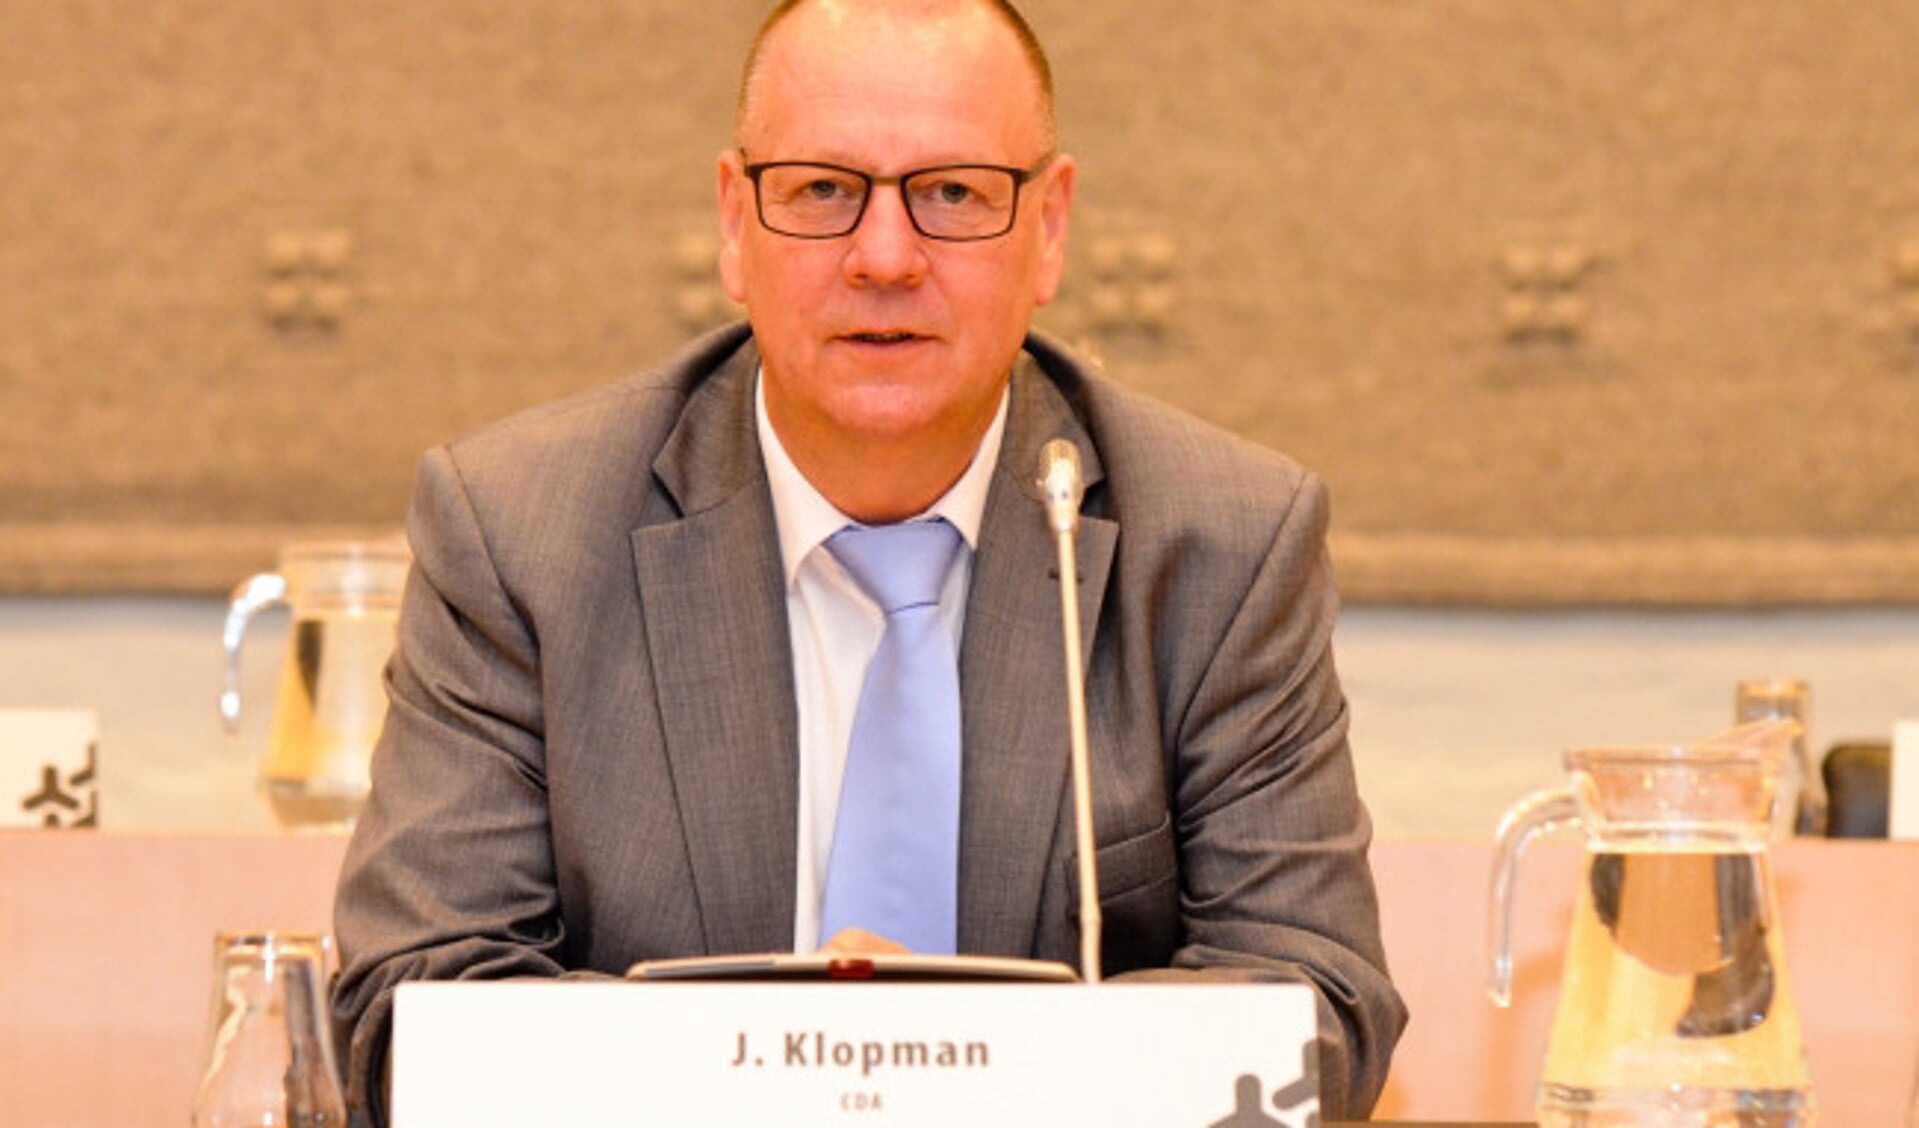  Jan Klopman